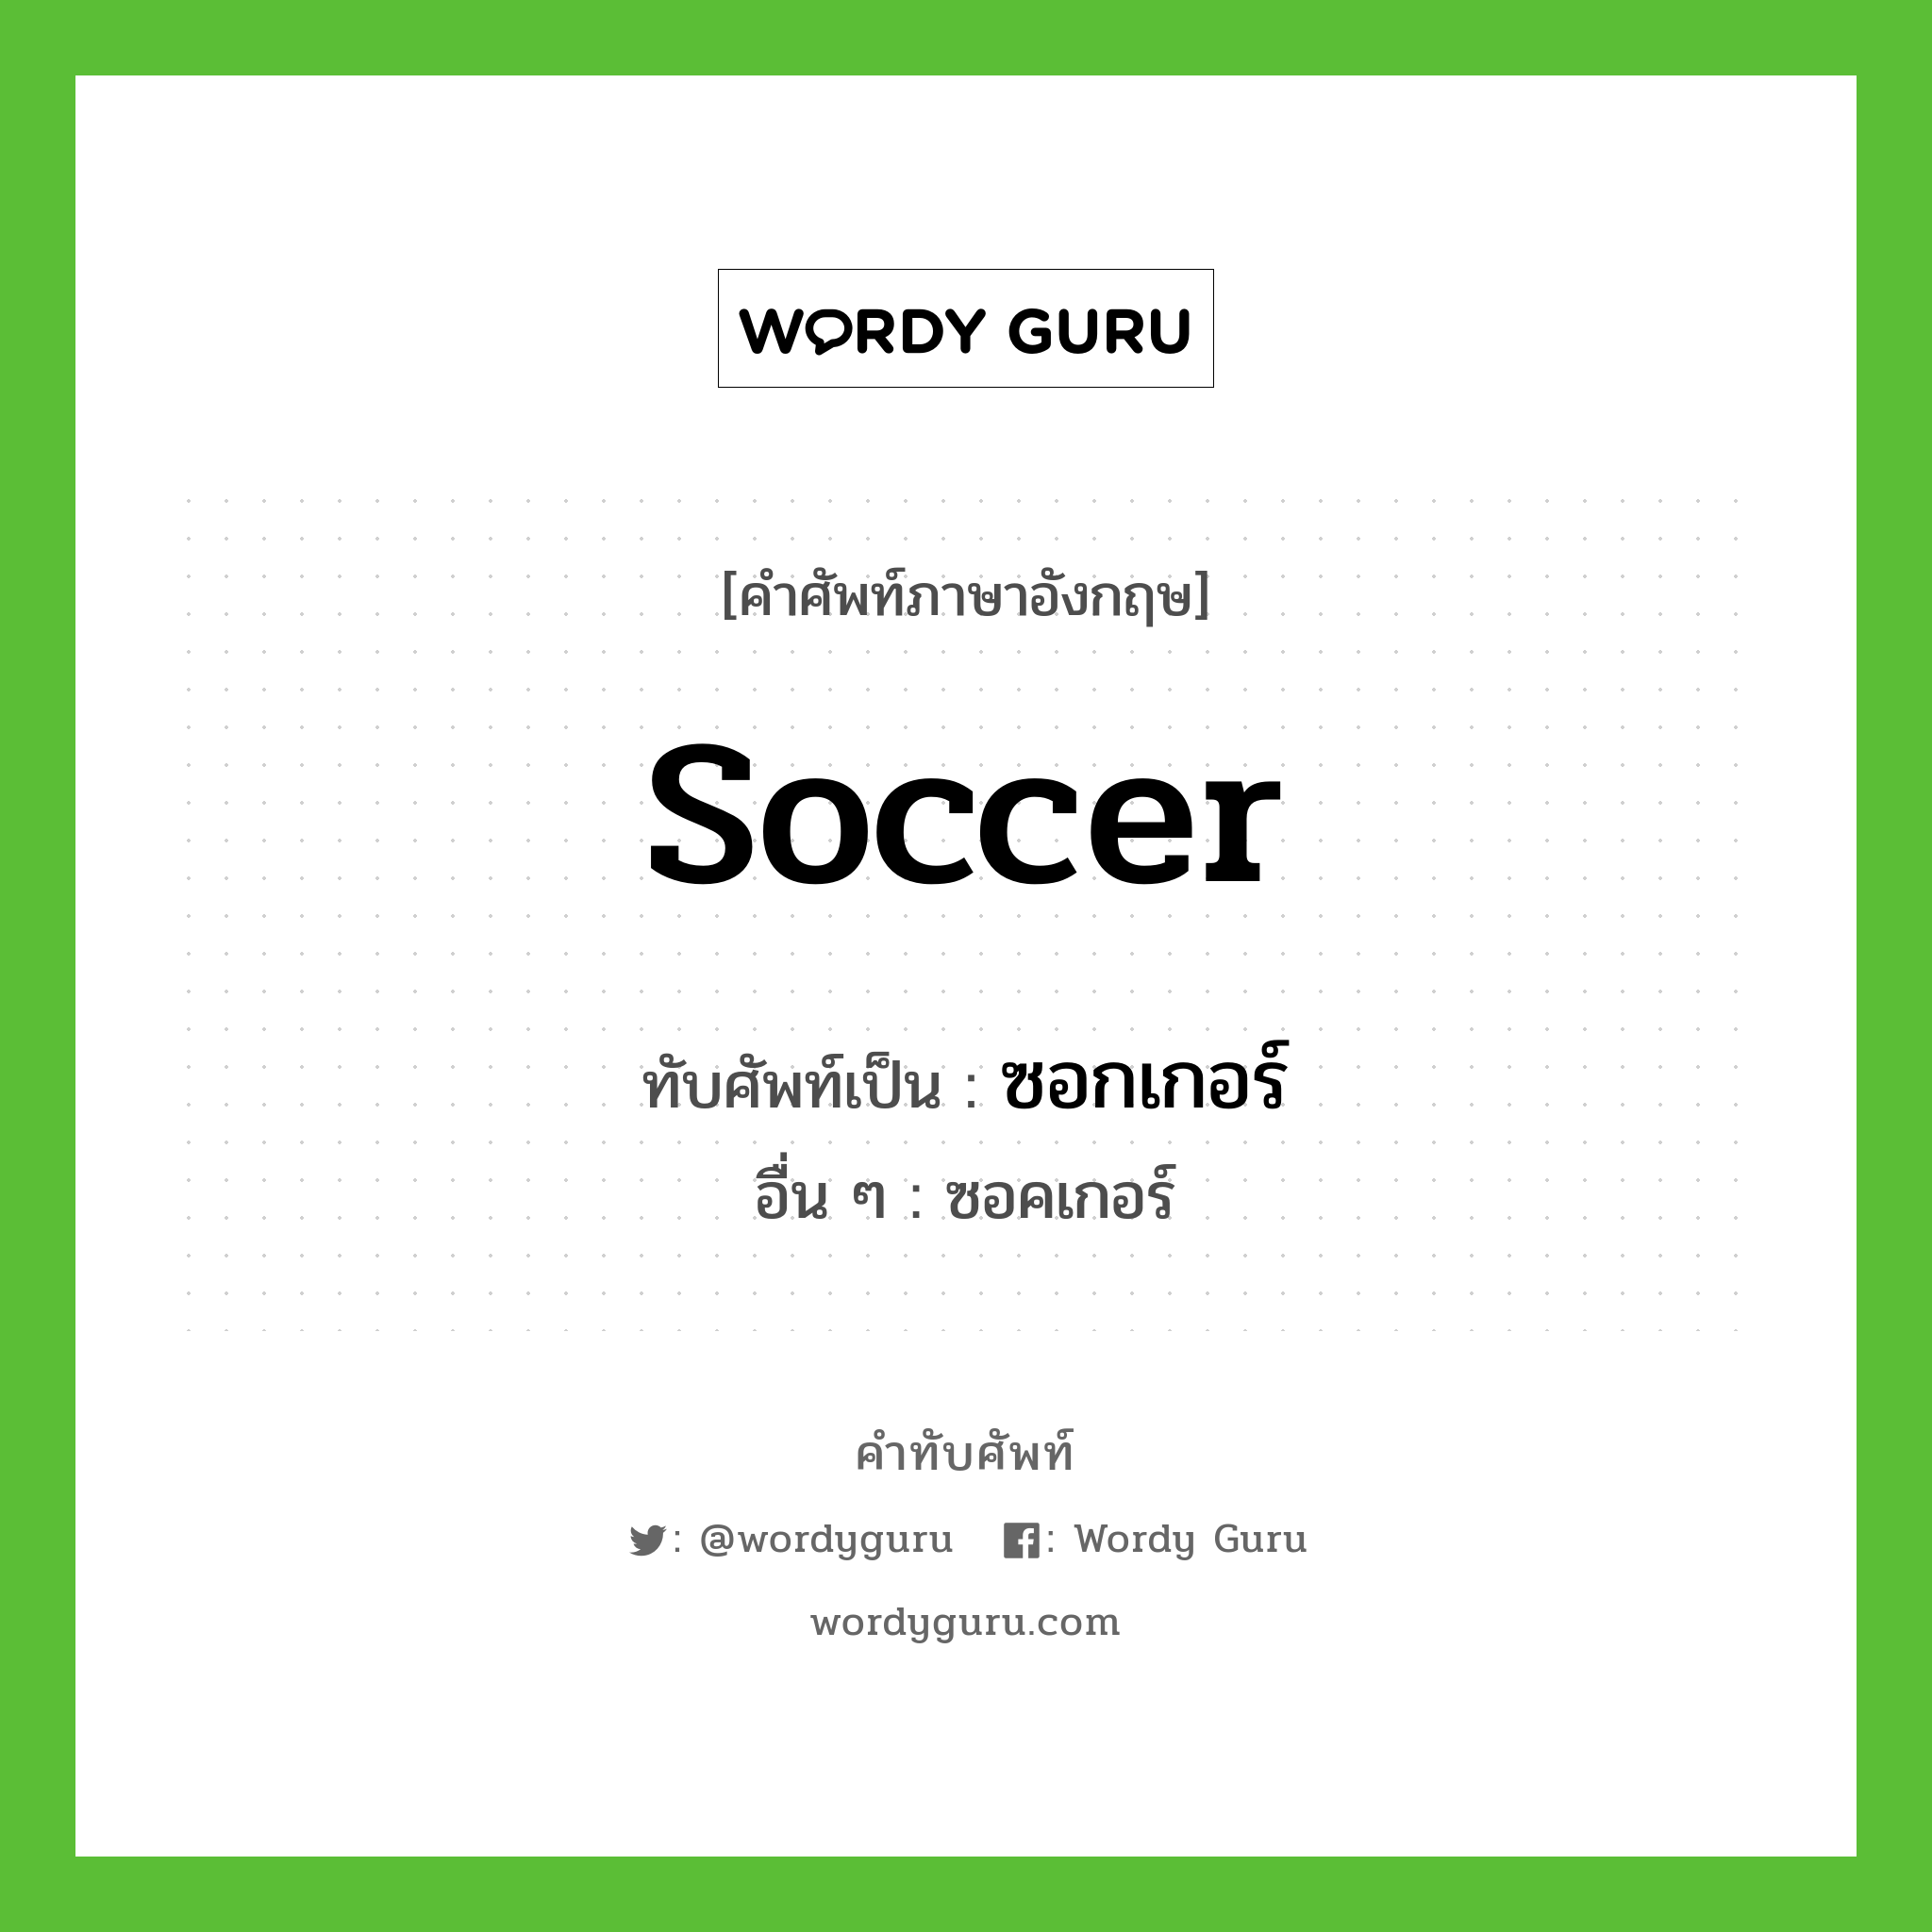 soccer เขียนเป็นคำไทยว่าอะไร?, คำศัพท์ภาษาอังกฤษ soccer ทับศัพท์เป็น ซอกเกอร์ อื่น ๆ ซอคเกอร์